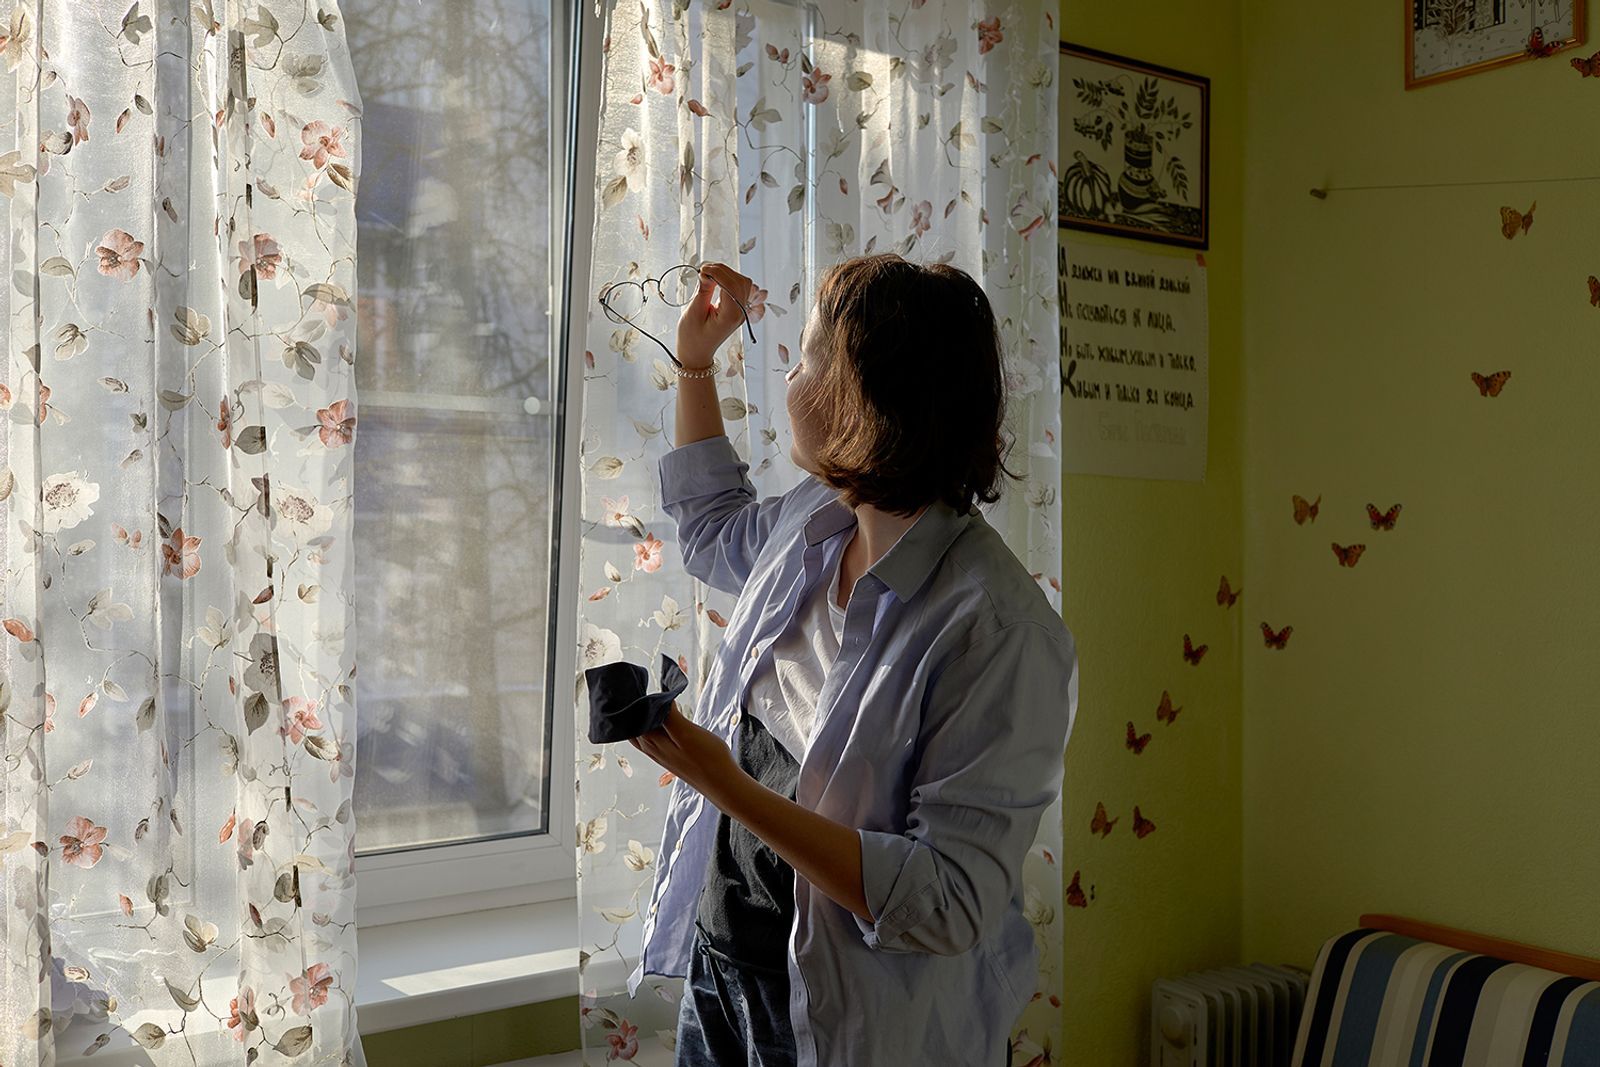 © Ksenia Kuleshova - Russia, Obninsk, 22/04/2019. Lisa Kamenskaya (21) in her room. She is openly gay.